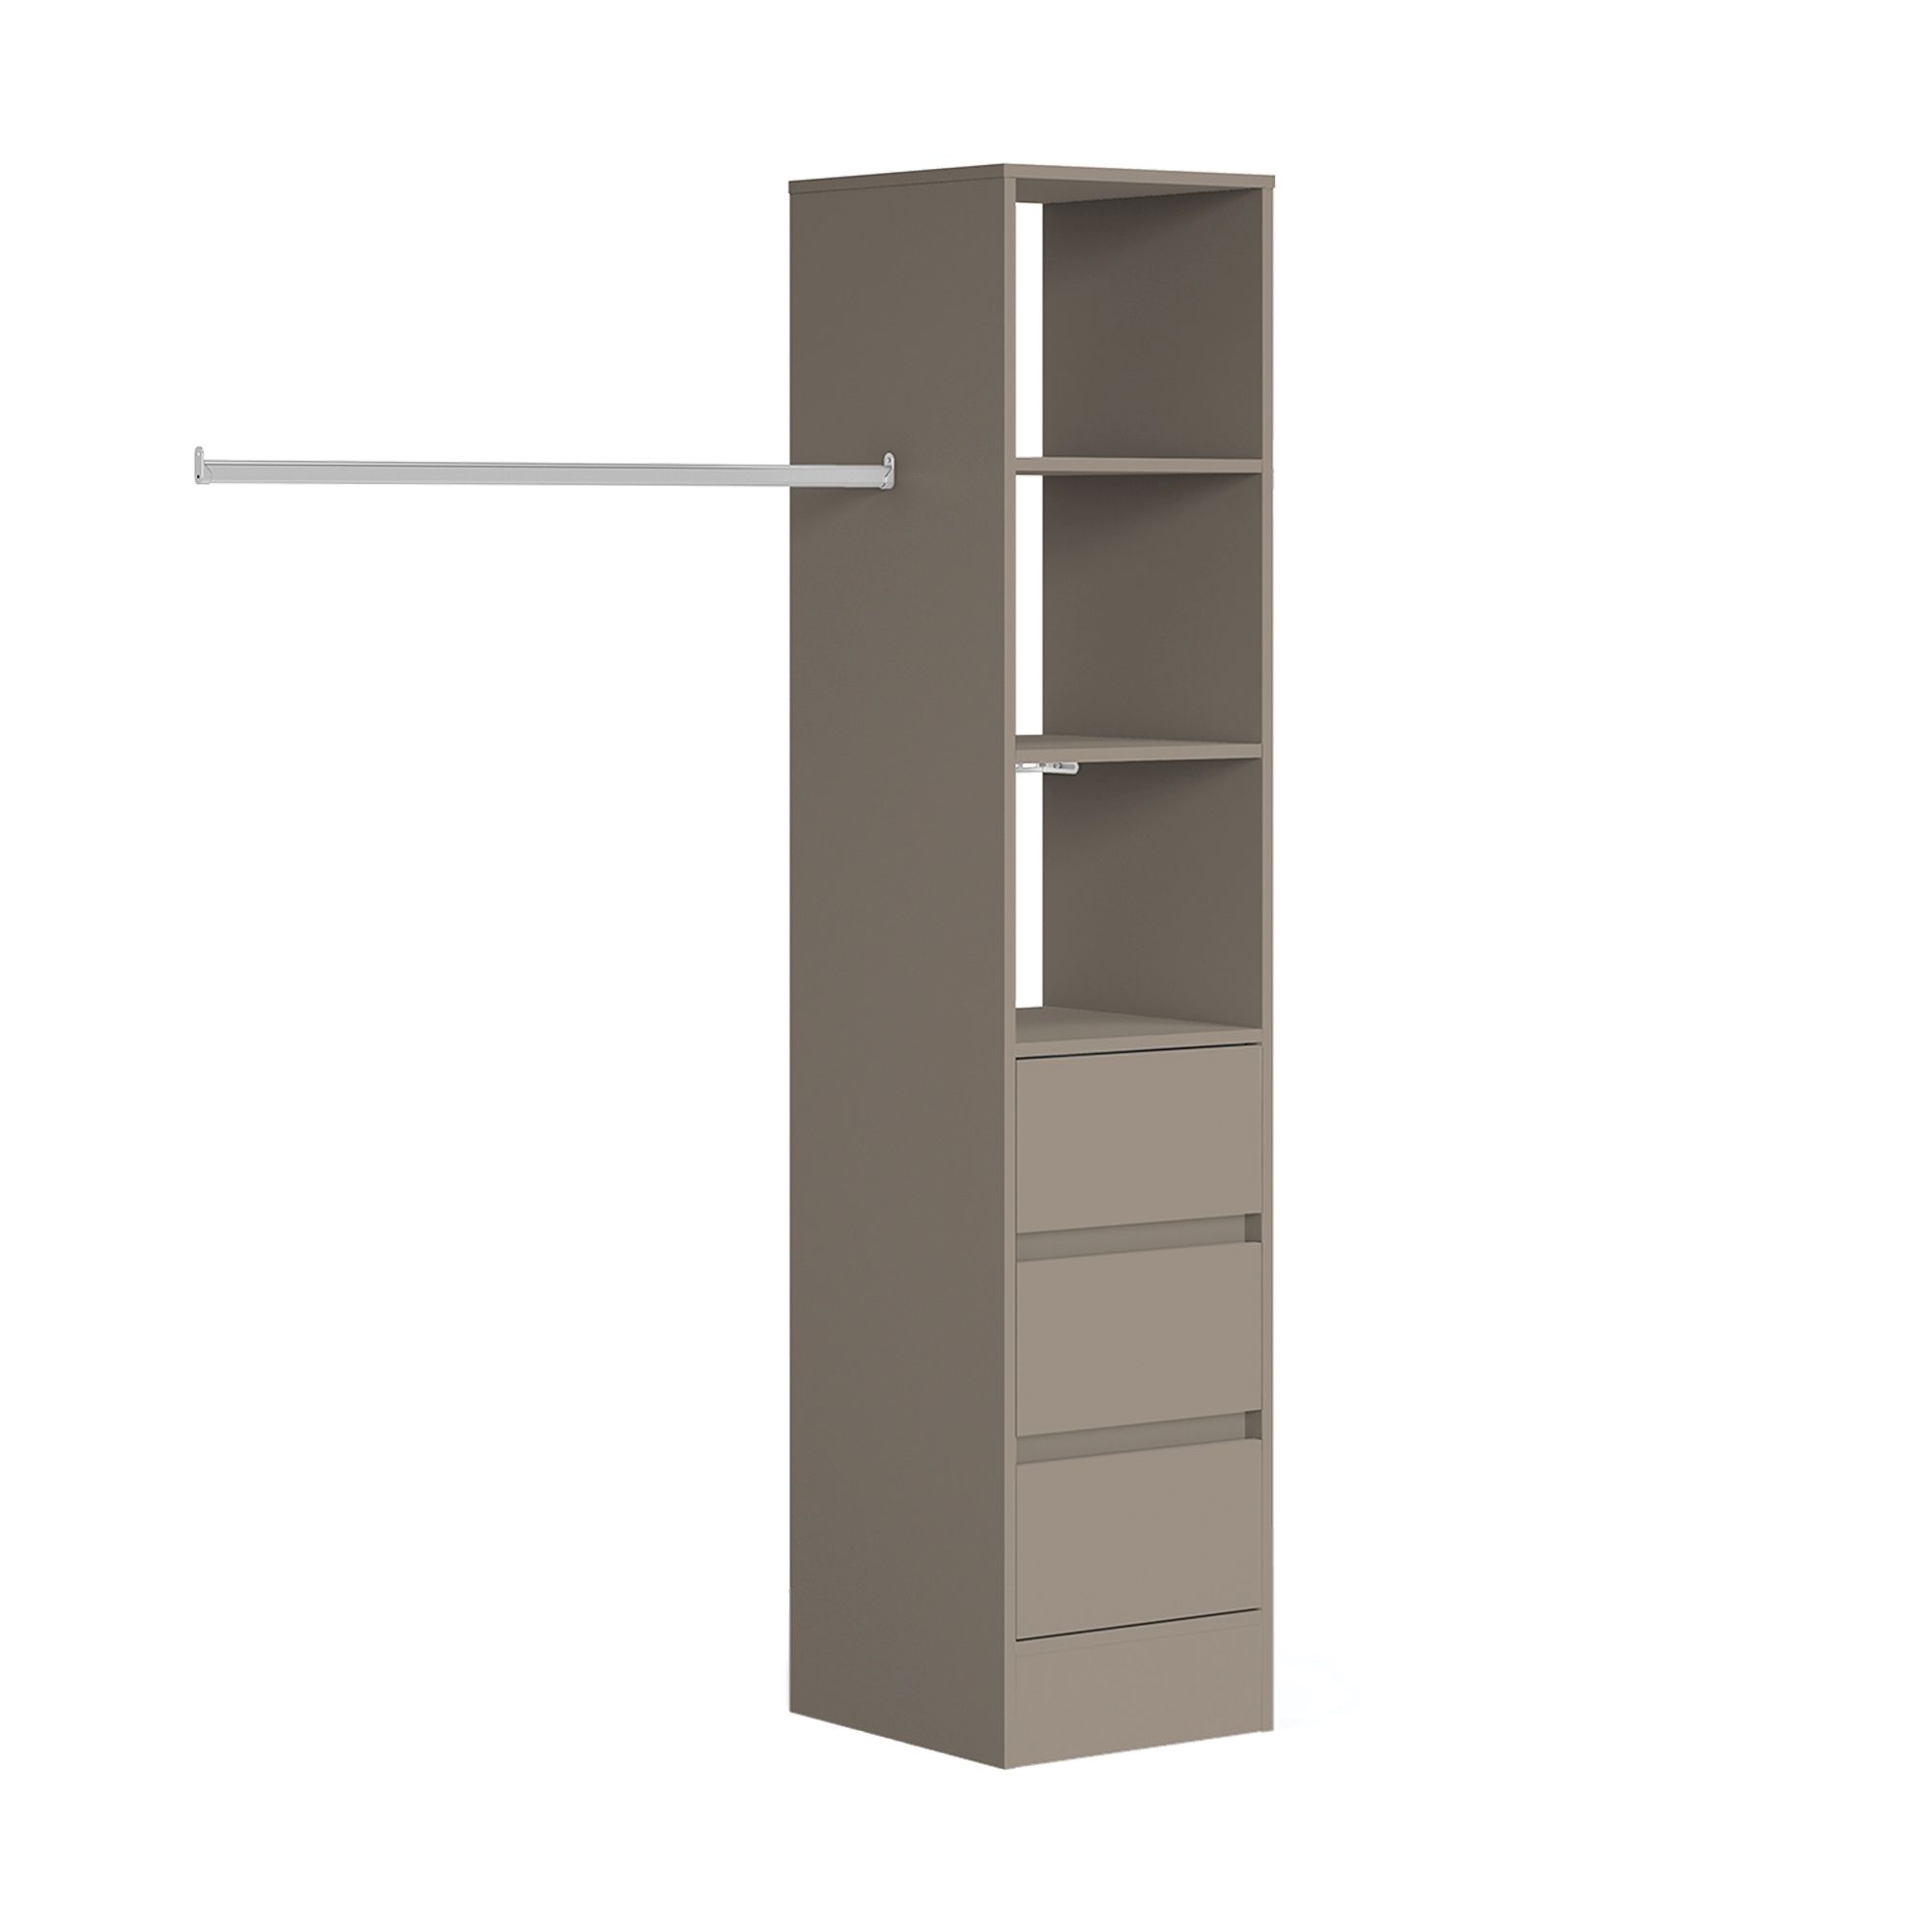 Image of Spacepro Wardrobe Storage Kit Tower Unit with 3 Drawers Stone Grey - 450mm